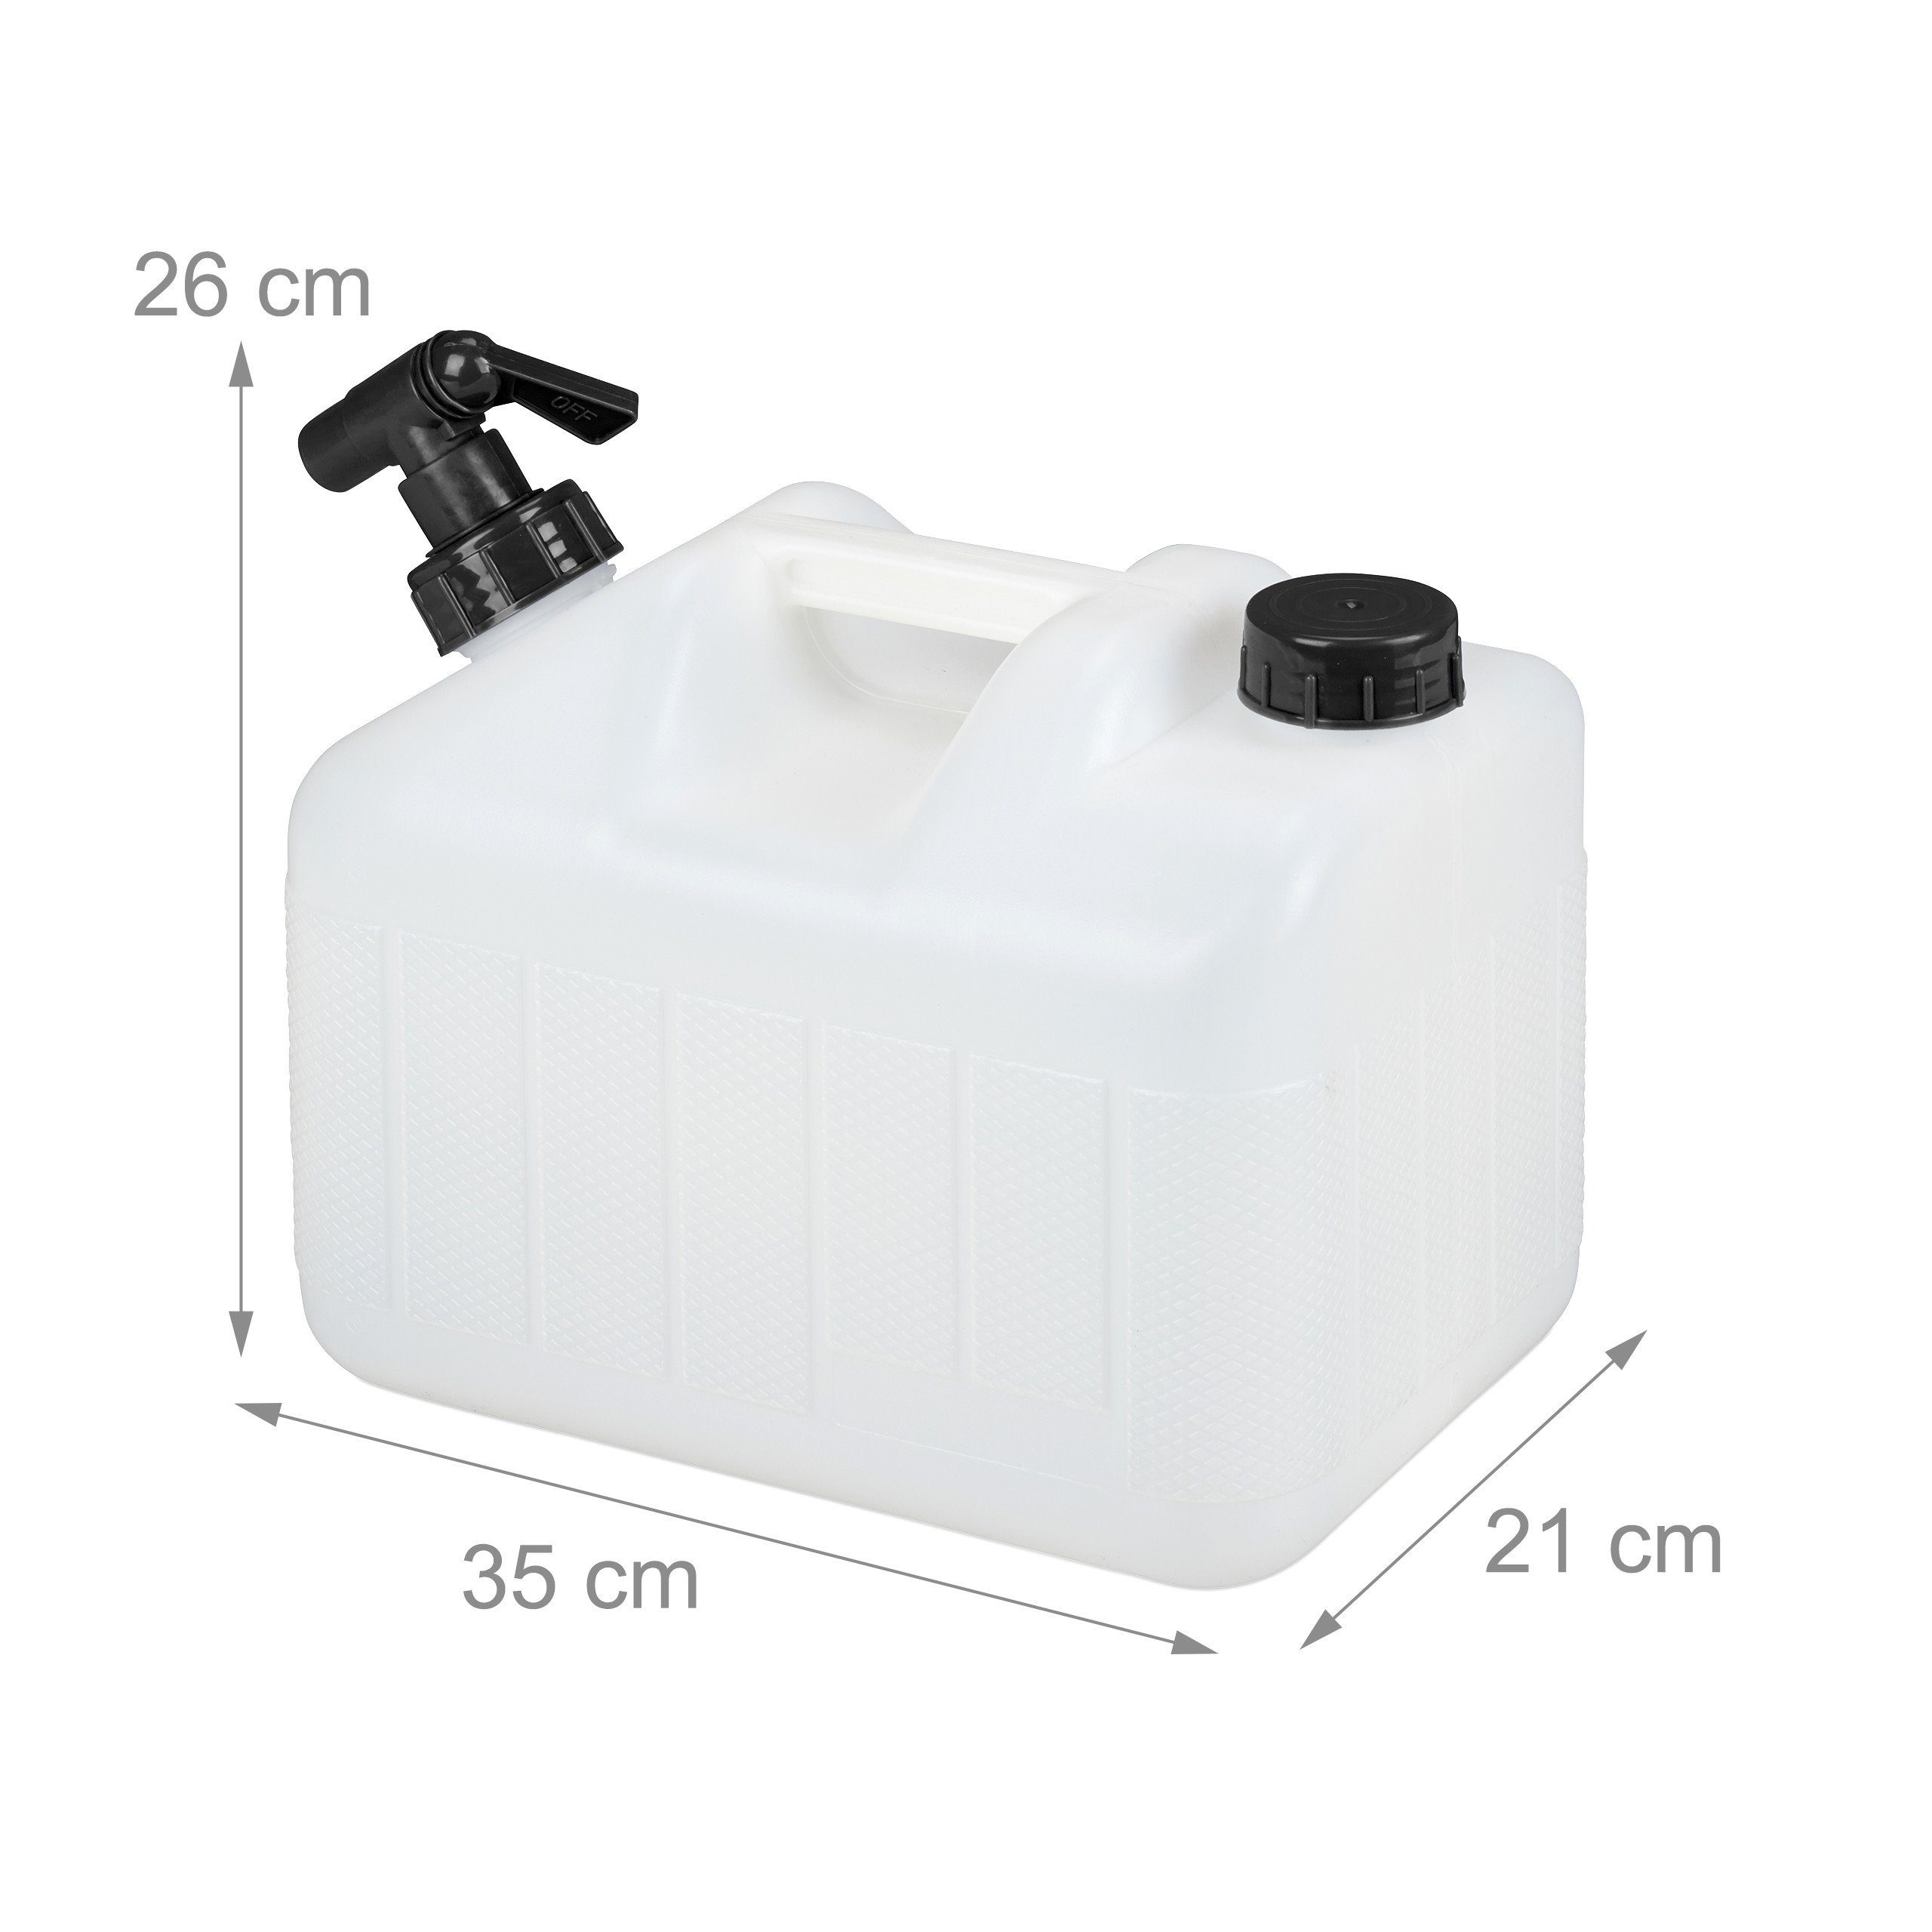 10 mit Liter Kanister Hahn, relaxdays Wasserkanister